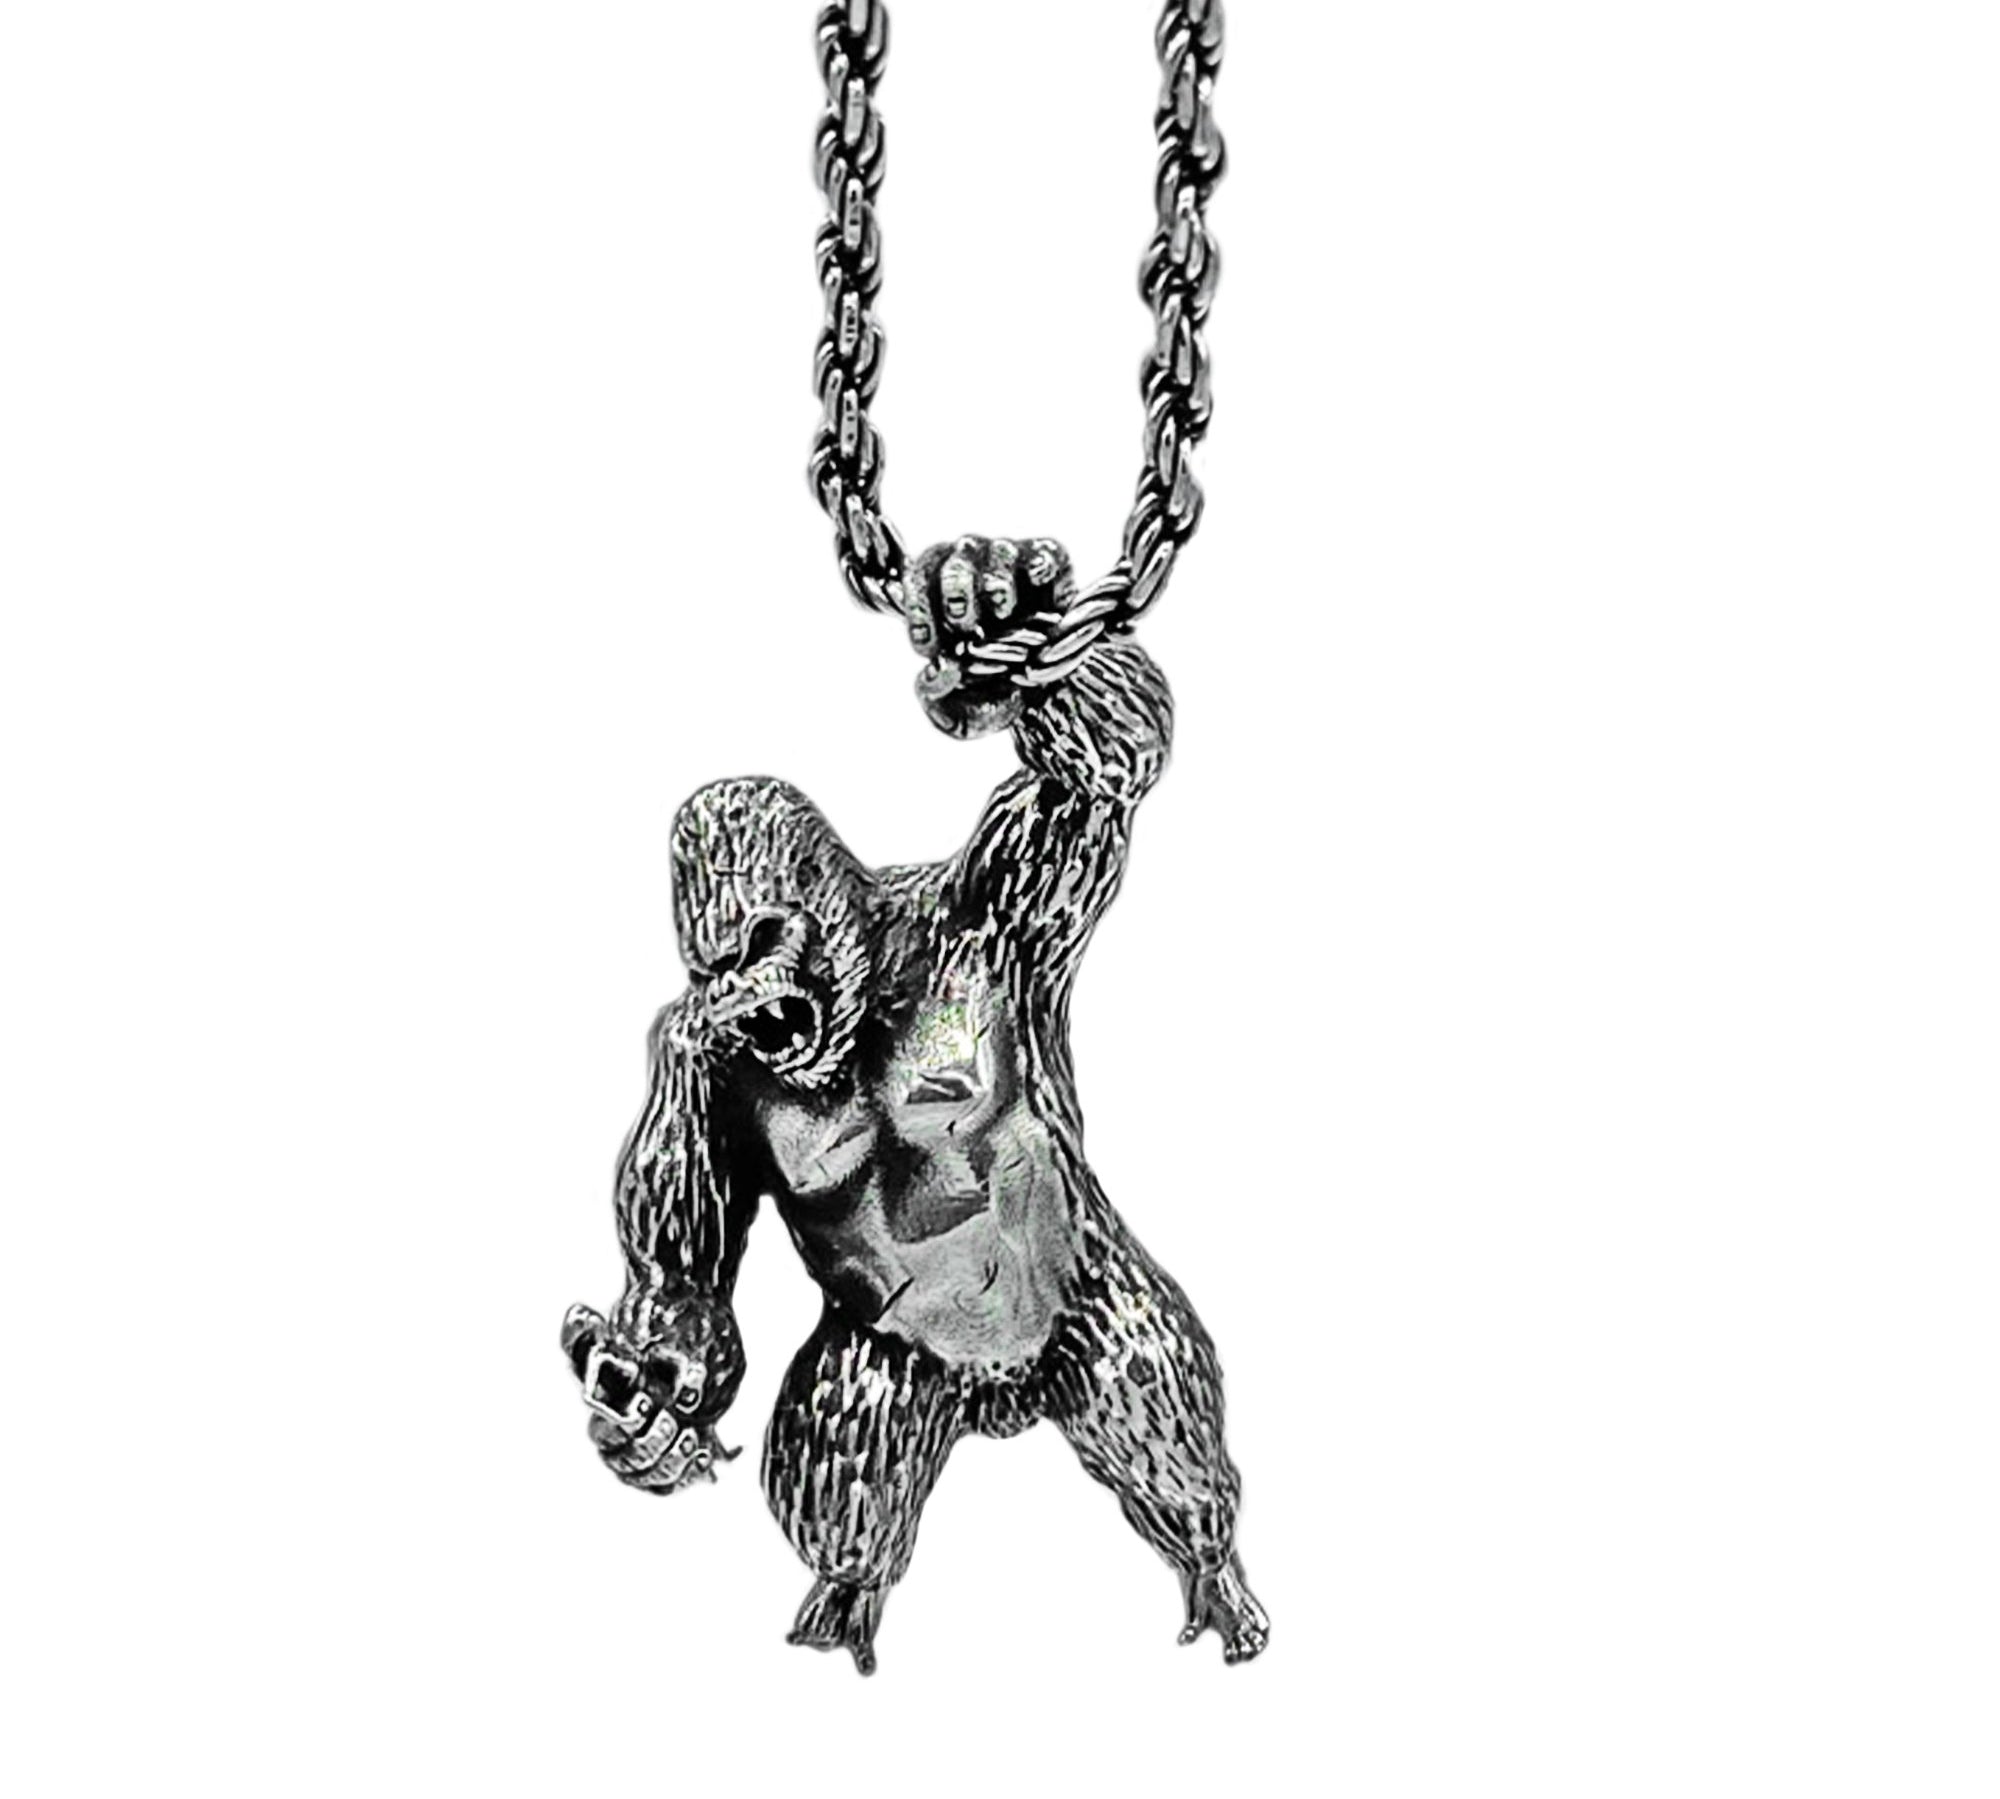 King Kong necklace, king Kong Merch, king Kong accessories, king Kong 8th wonder of the world 